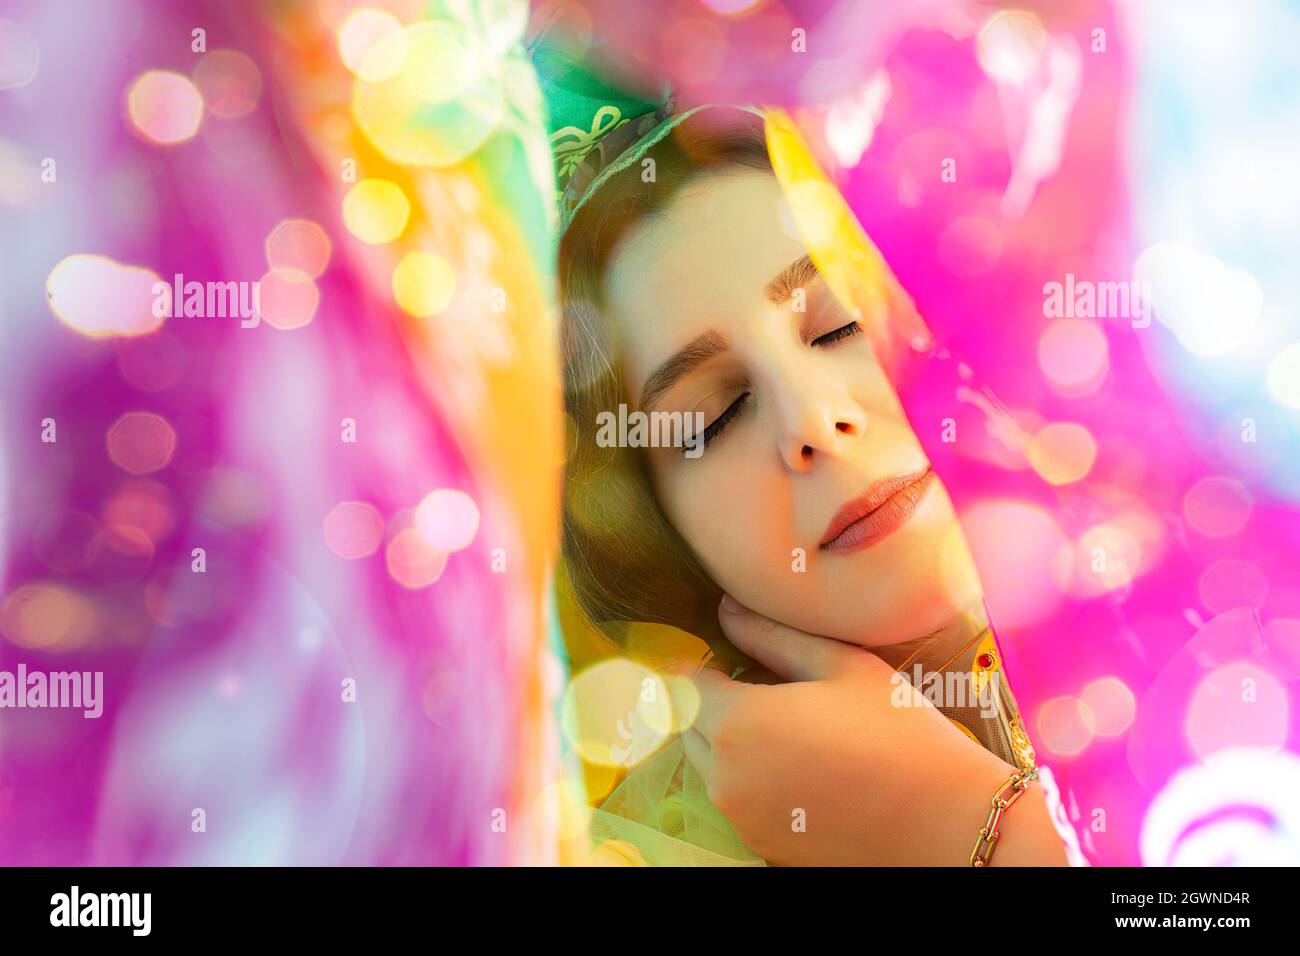 Sweet Dreams Sleeping Beauty, Stock Photo